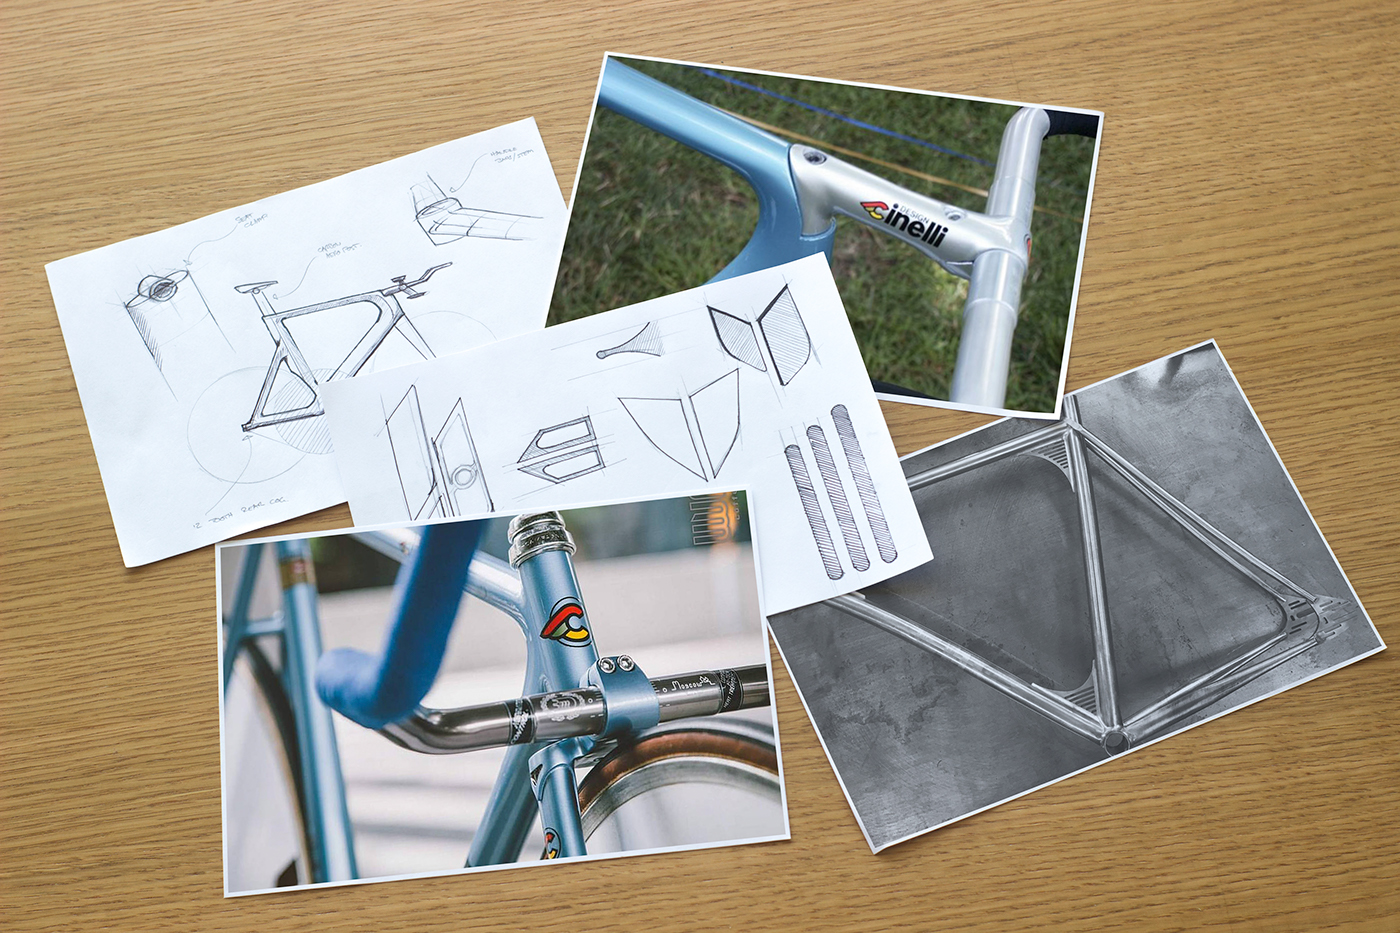 Bicycle Bike bike design Bicycle Design automotive   Automotive design transport design